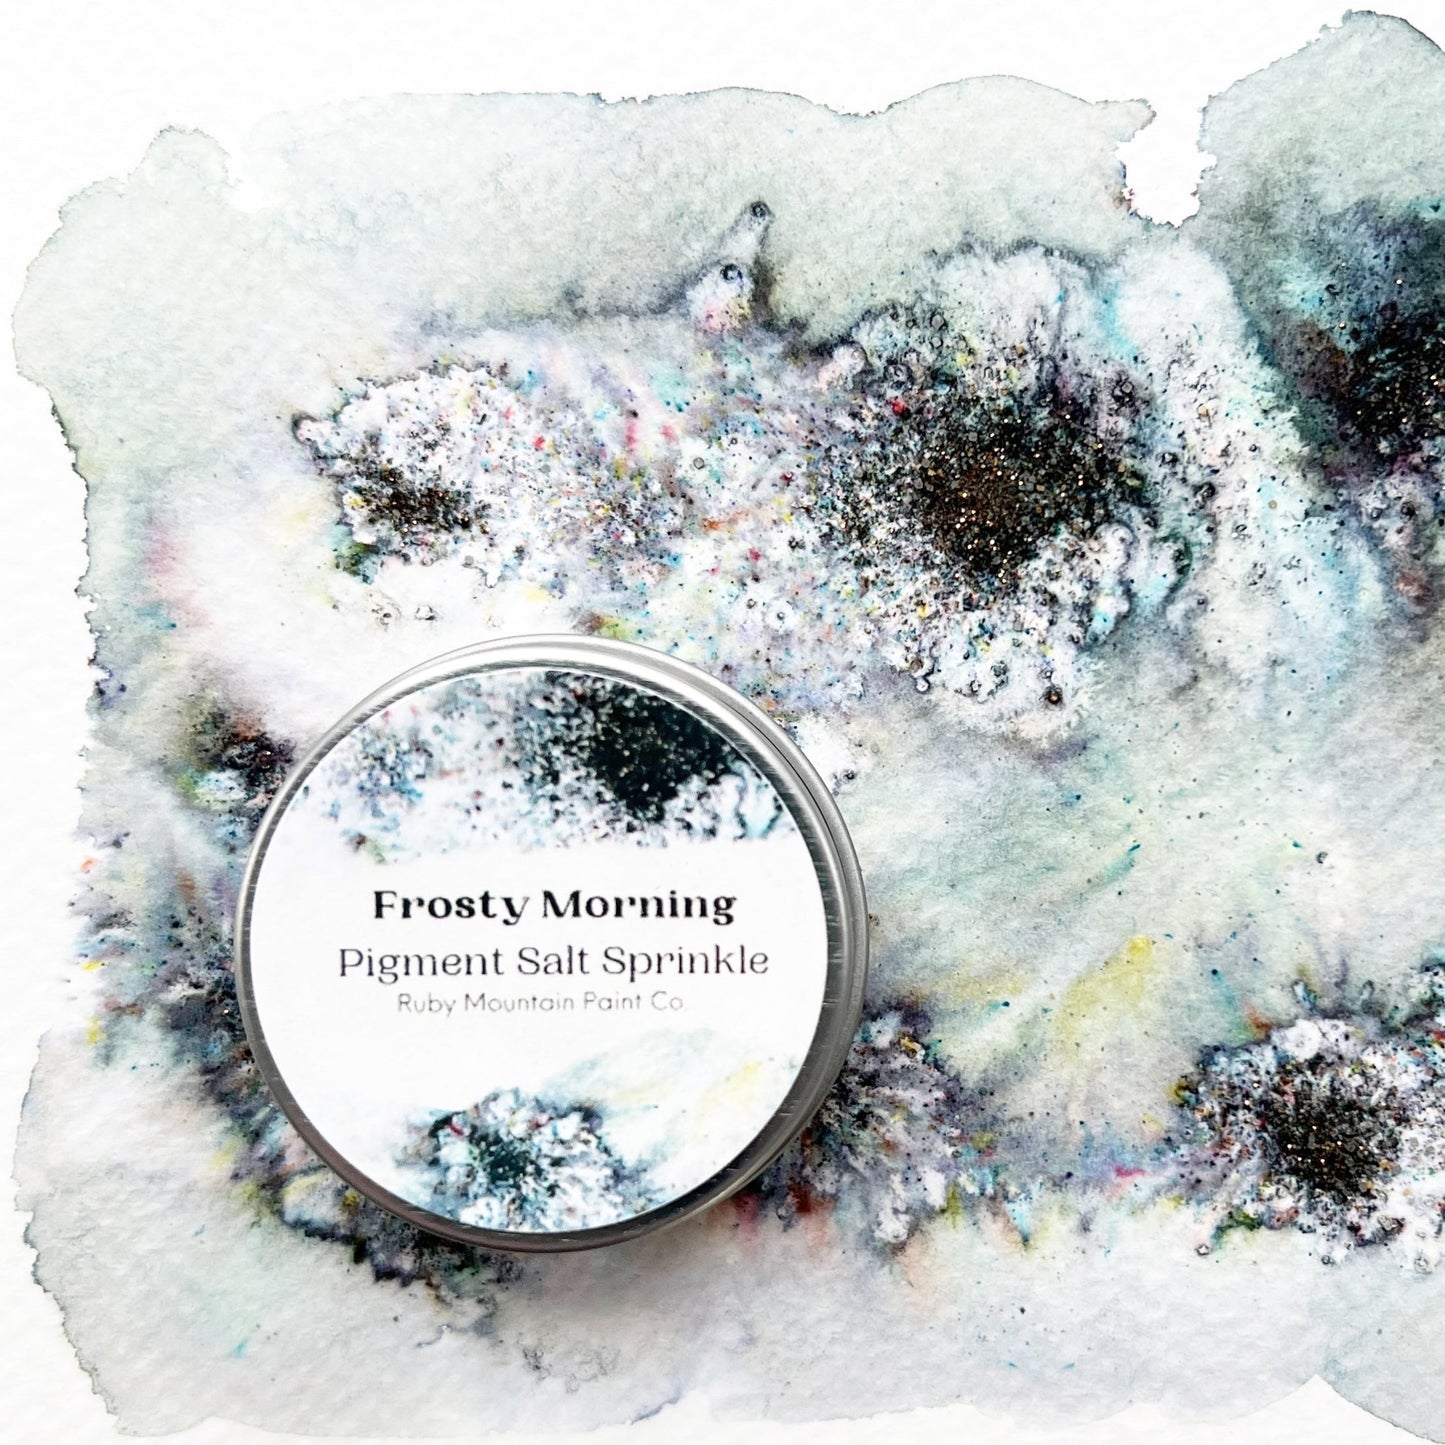 Frosty Morning Pigment Salt Sprinkle